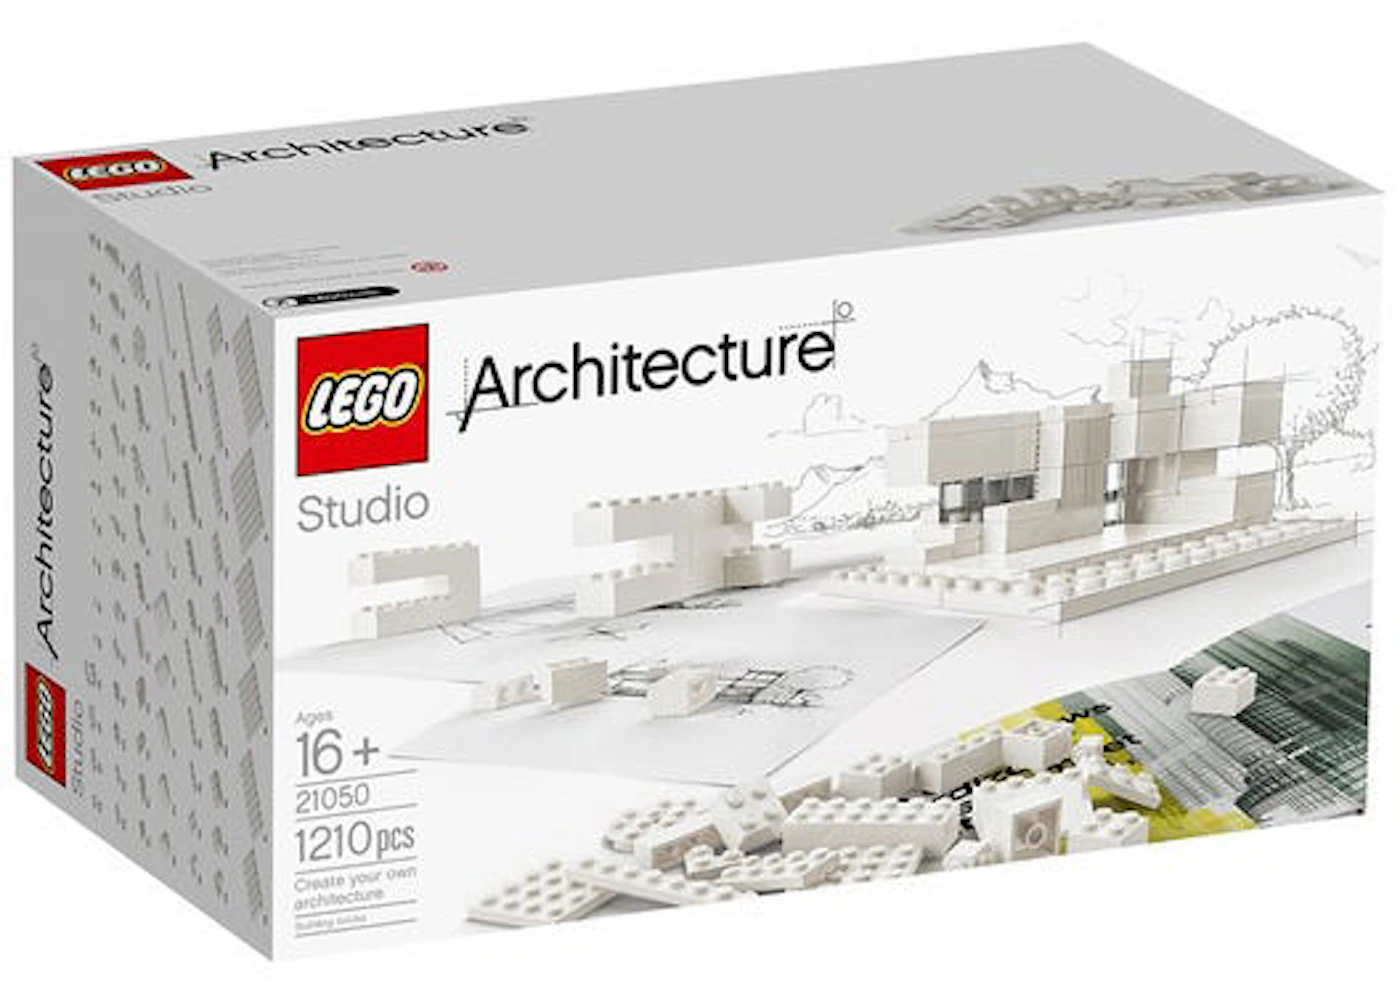 LEGO Architecture Studio Set 21050 - US